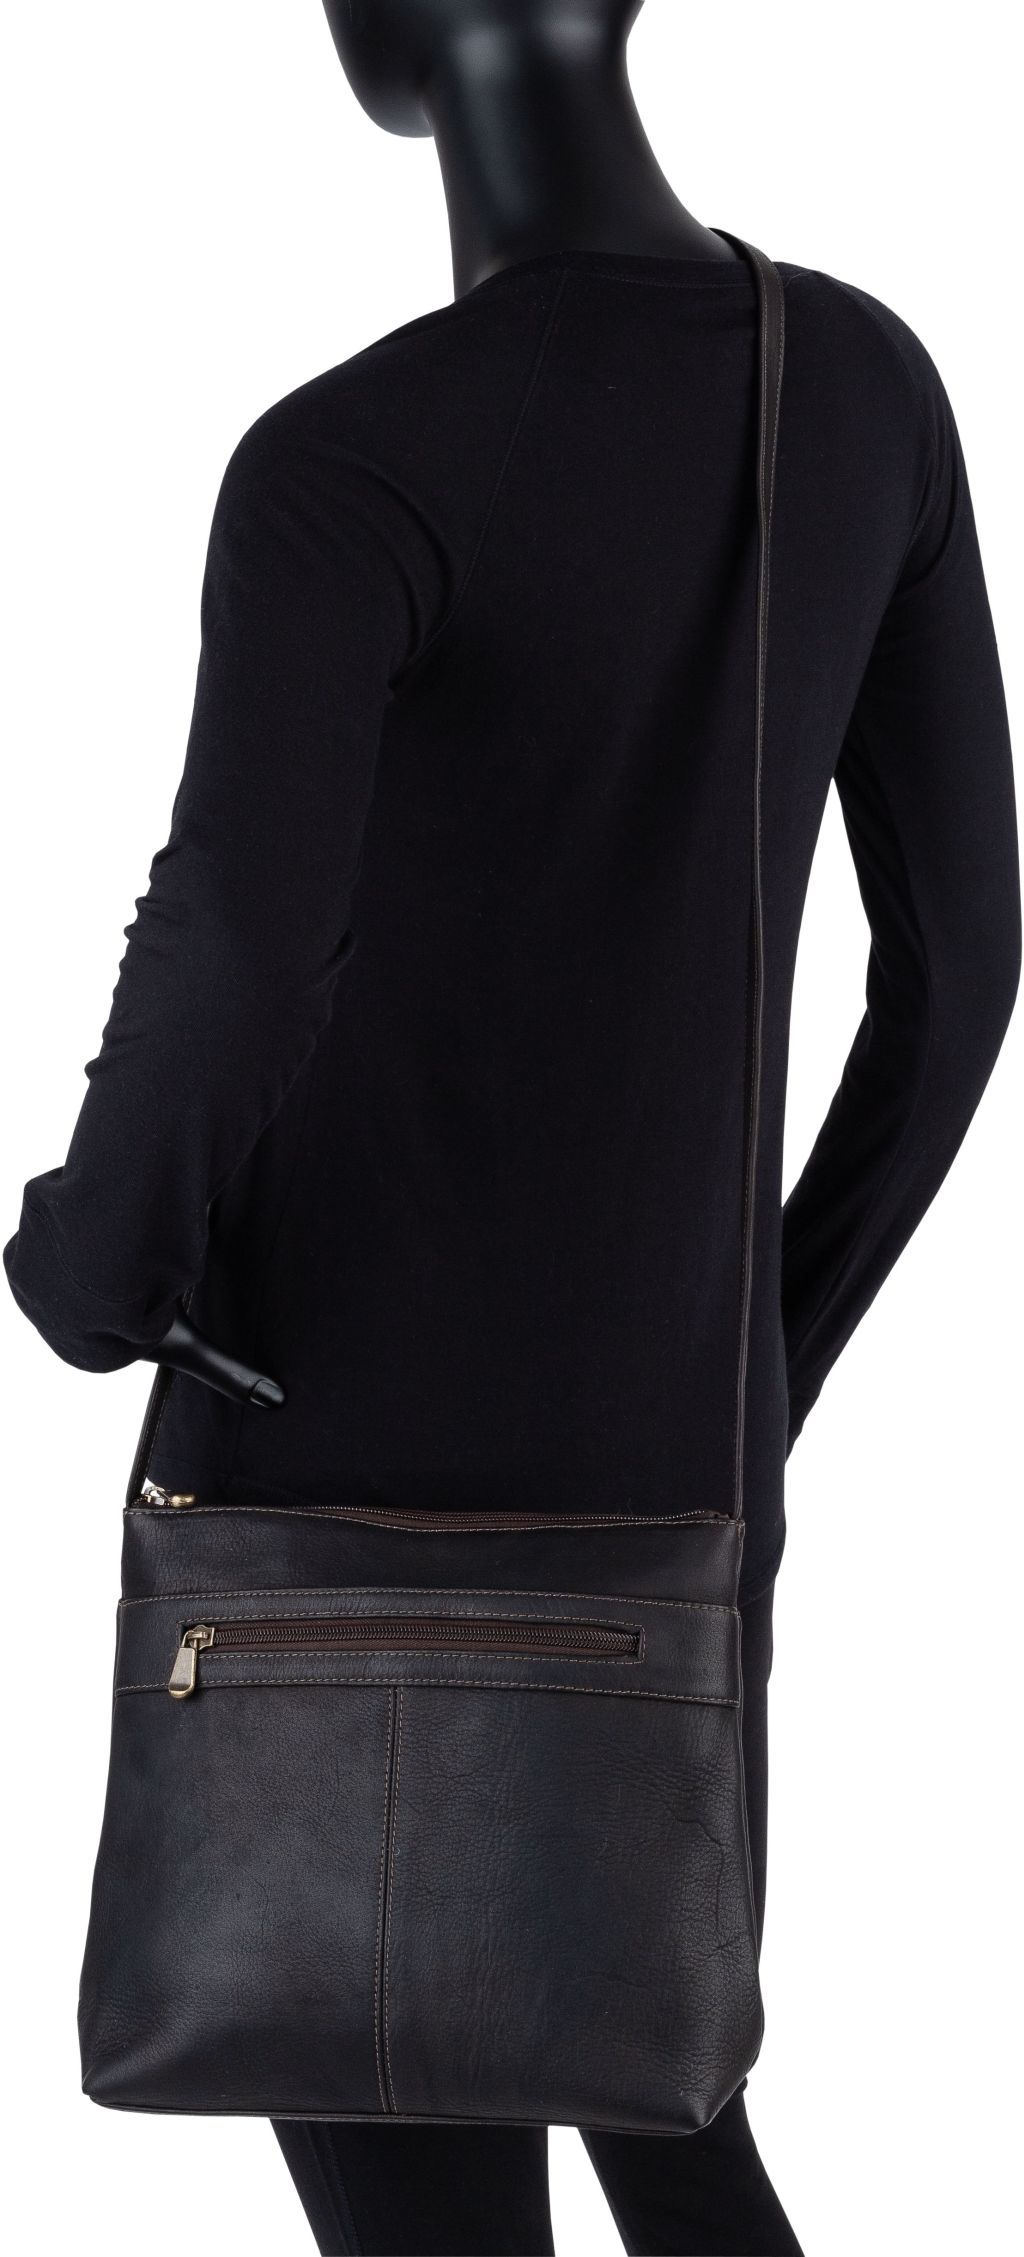 Le Donne Leather Glorienda Multi Bag LD-9966 - image 4 of 4